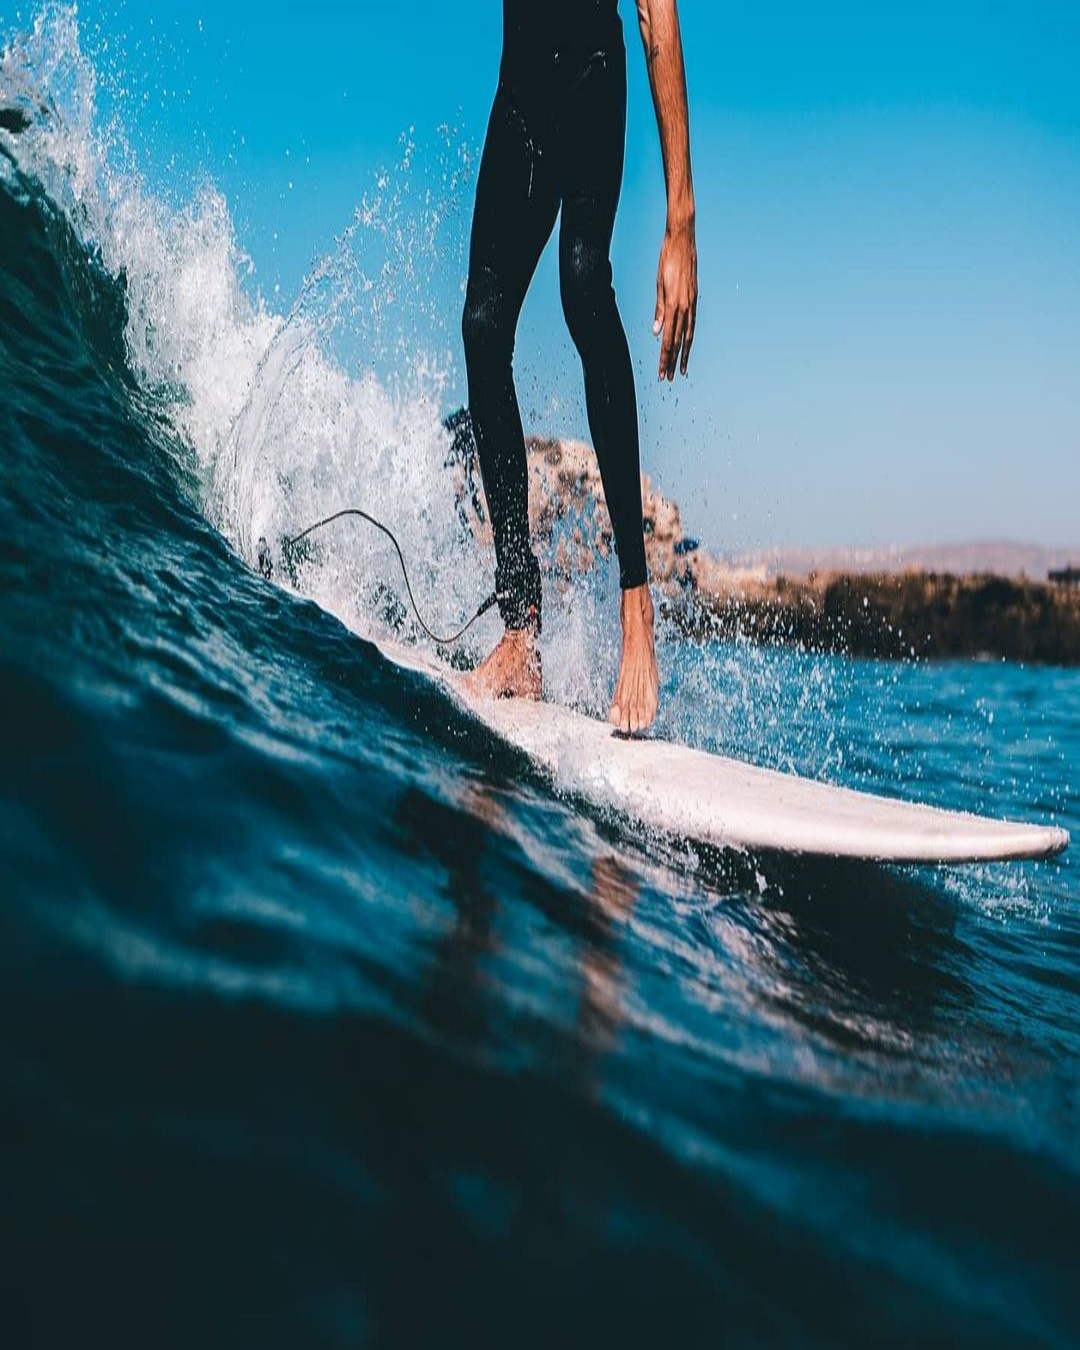 intermediate surfer image